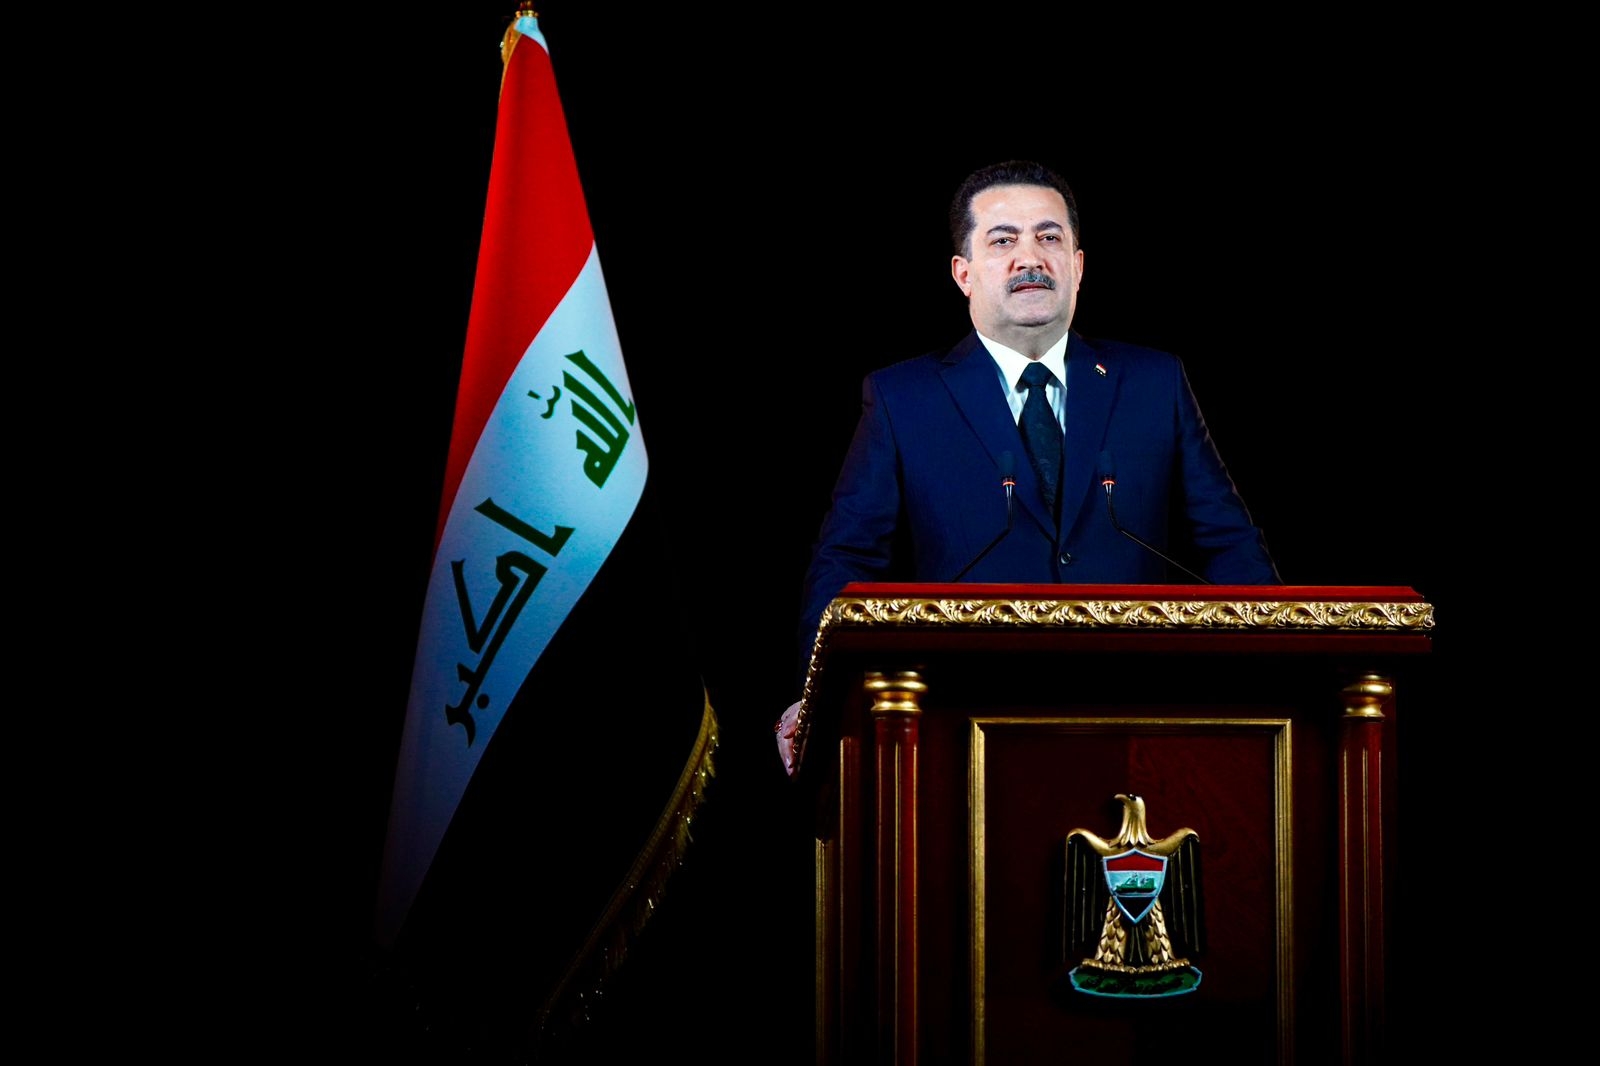 Iraqi PM extends condolences to Iran's Supreme Leader on President Raisi's tragic passing